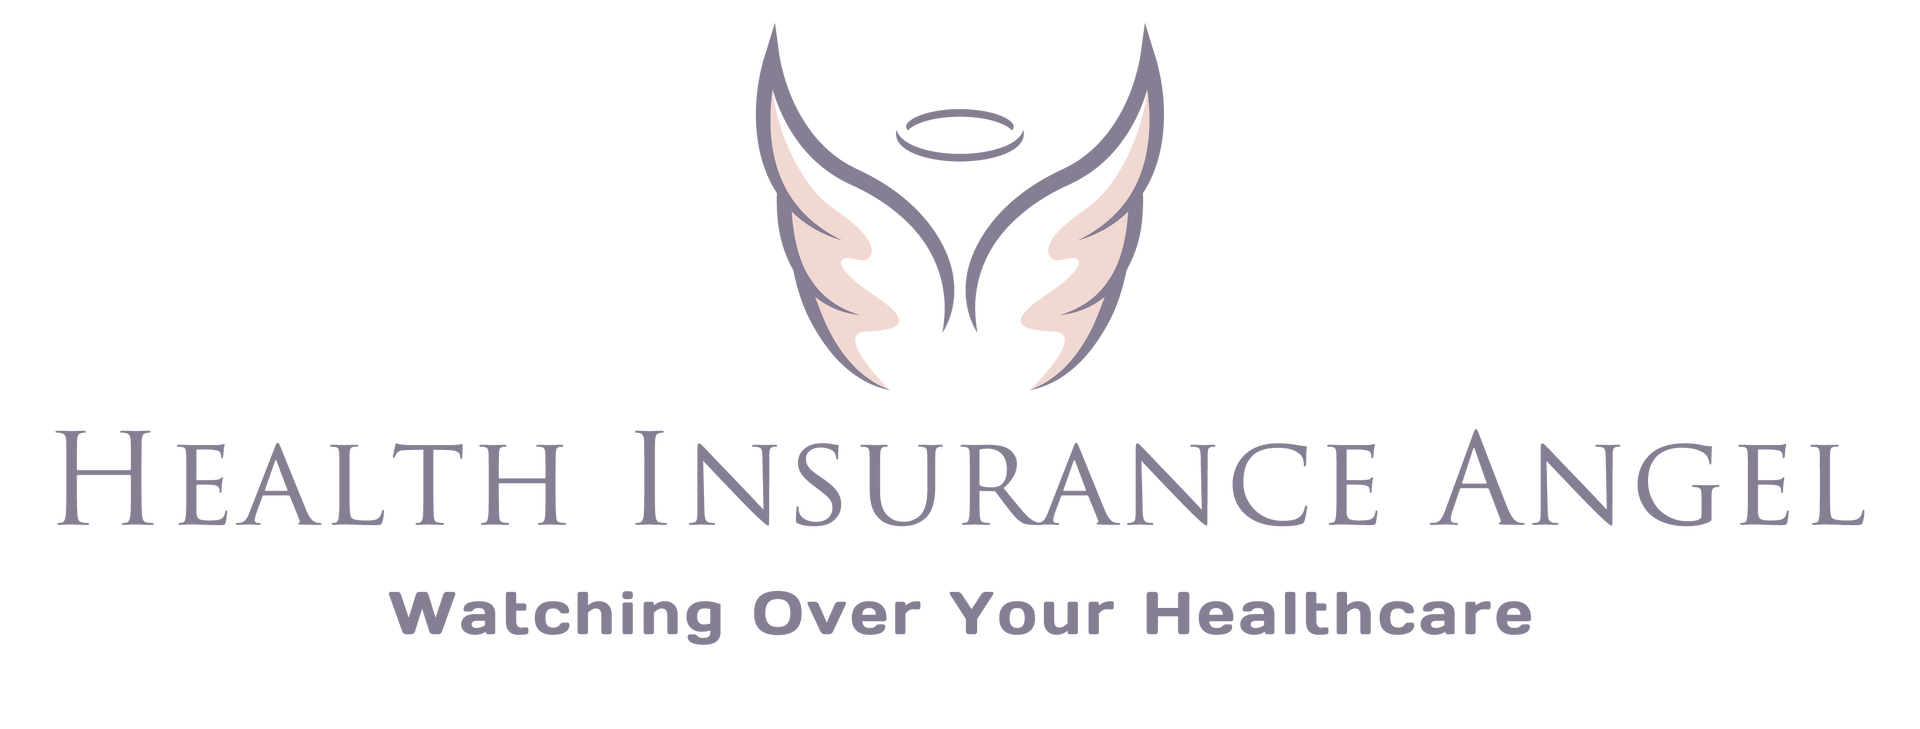 Health Insurance Angel logo